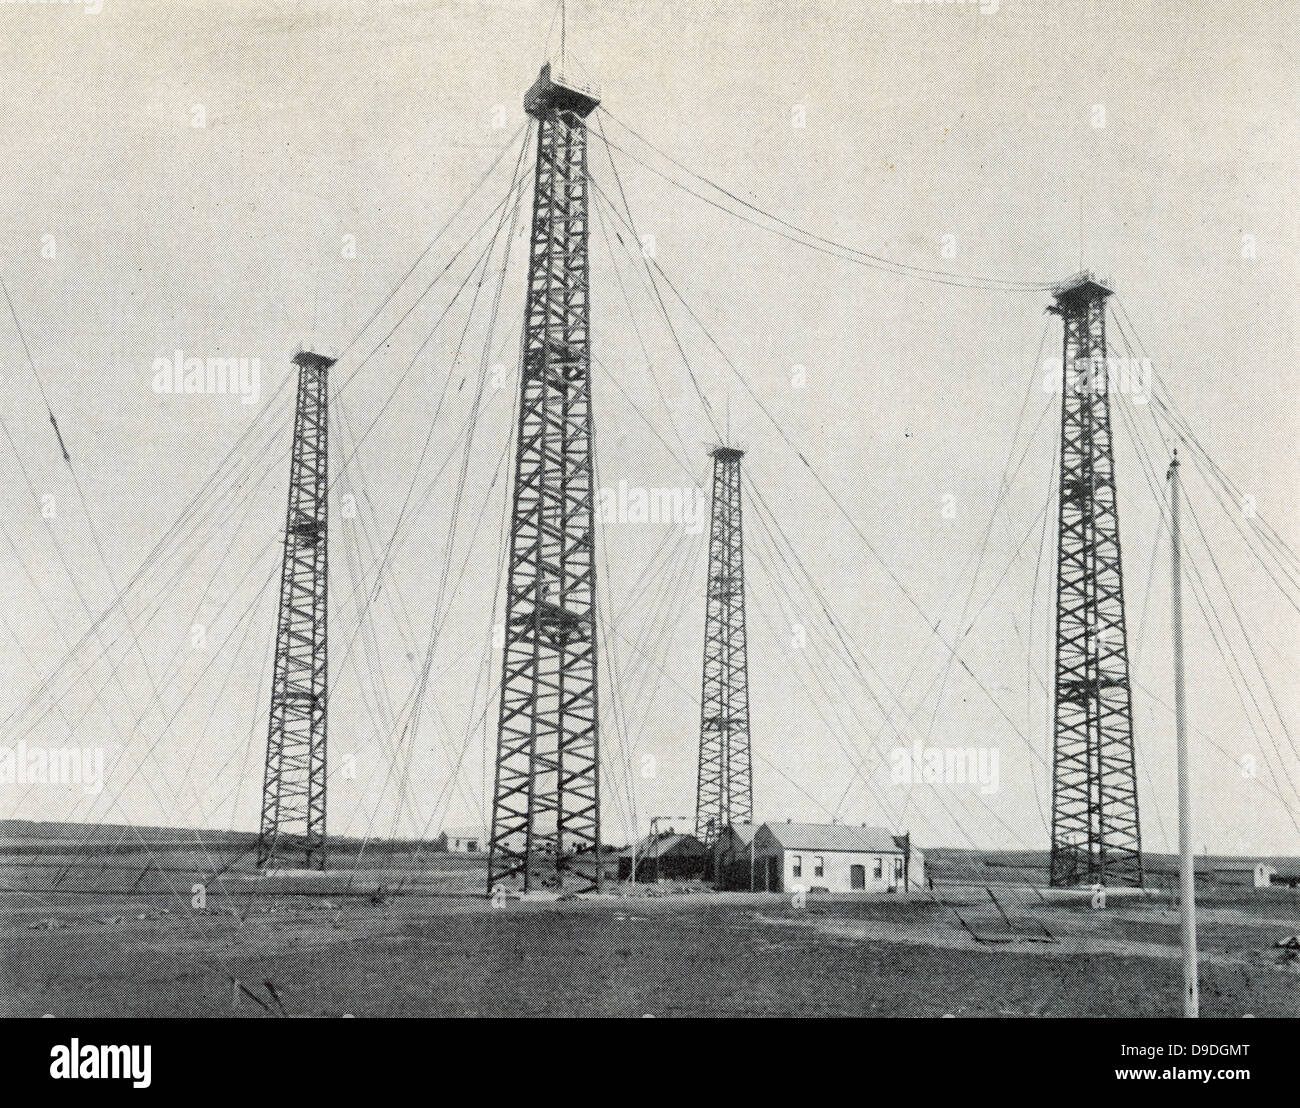 Poldhu Towers, Cornwall, England, Marconi station for sending radio signals  between Newfoundland and England, 1901 Stock Photo - Alamy